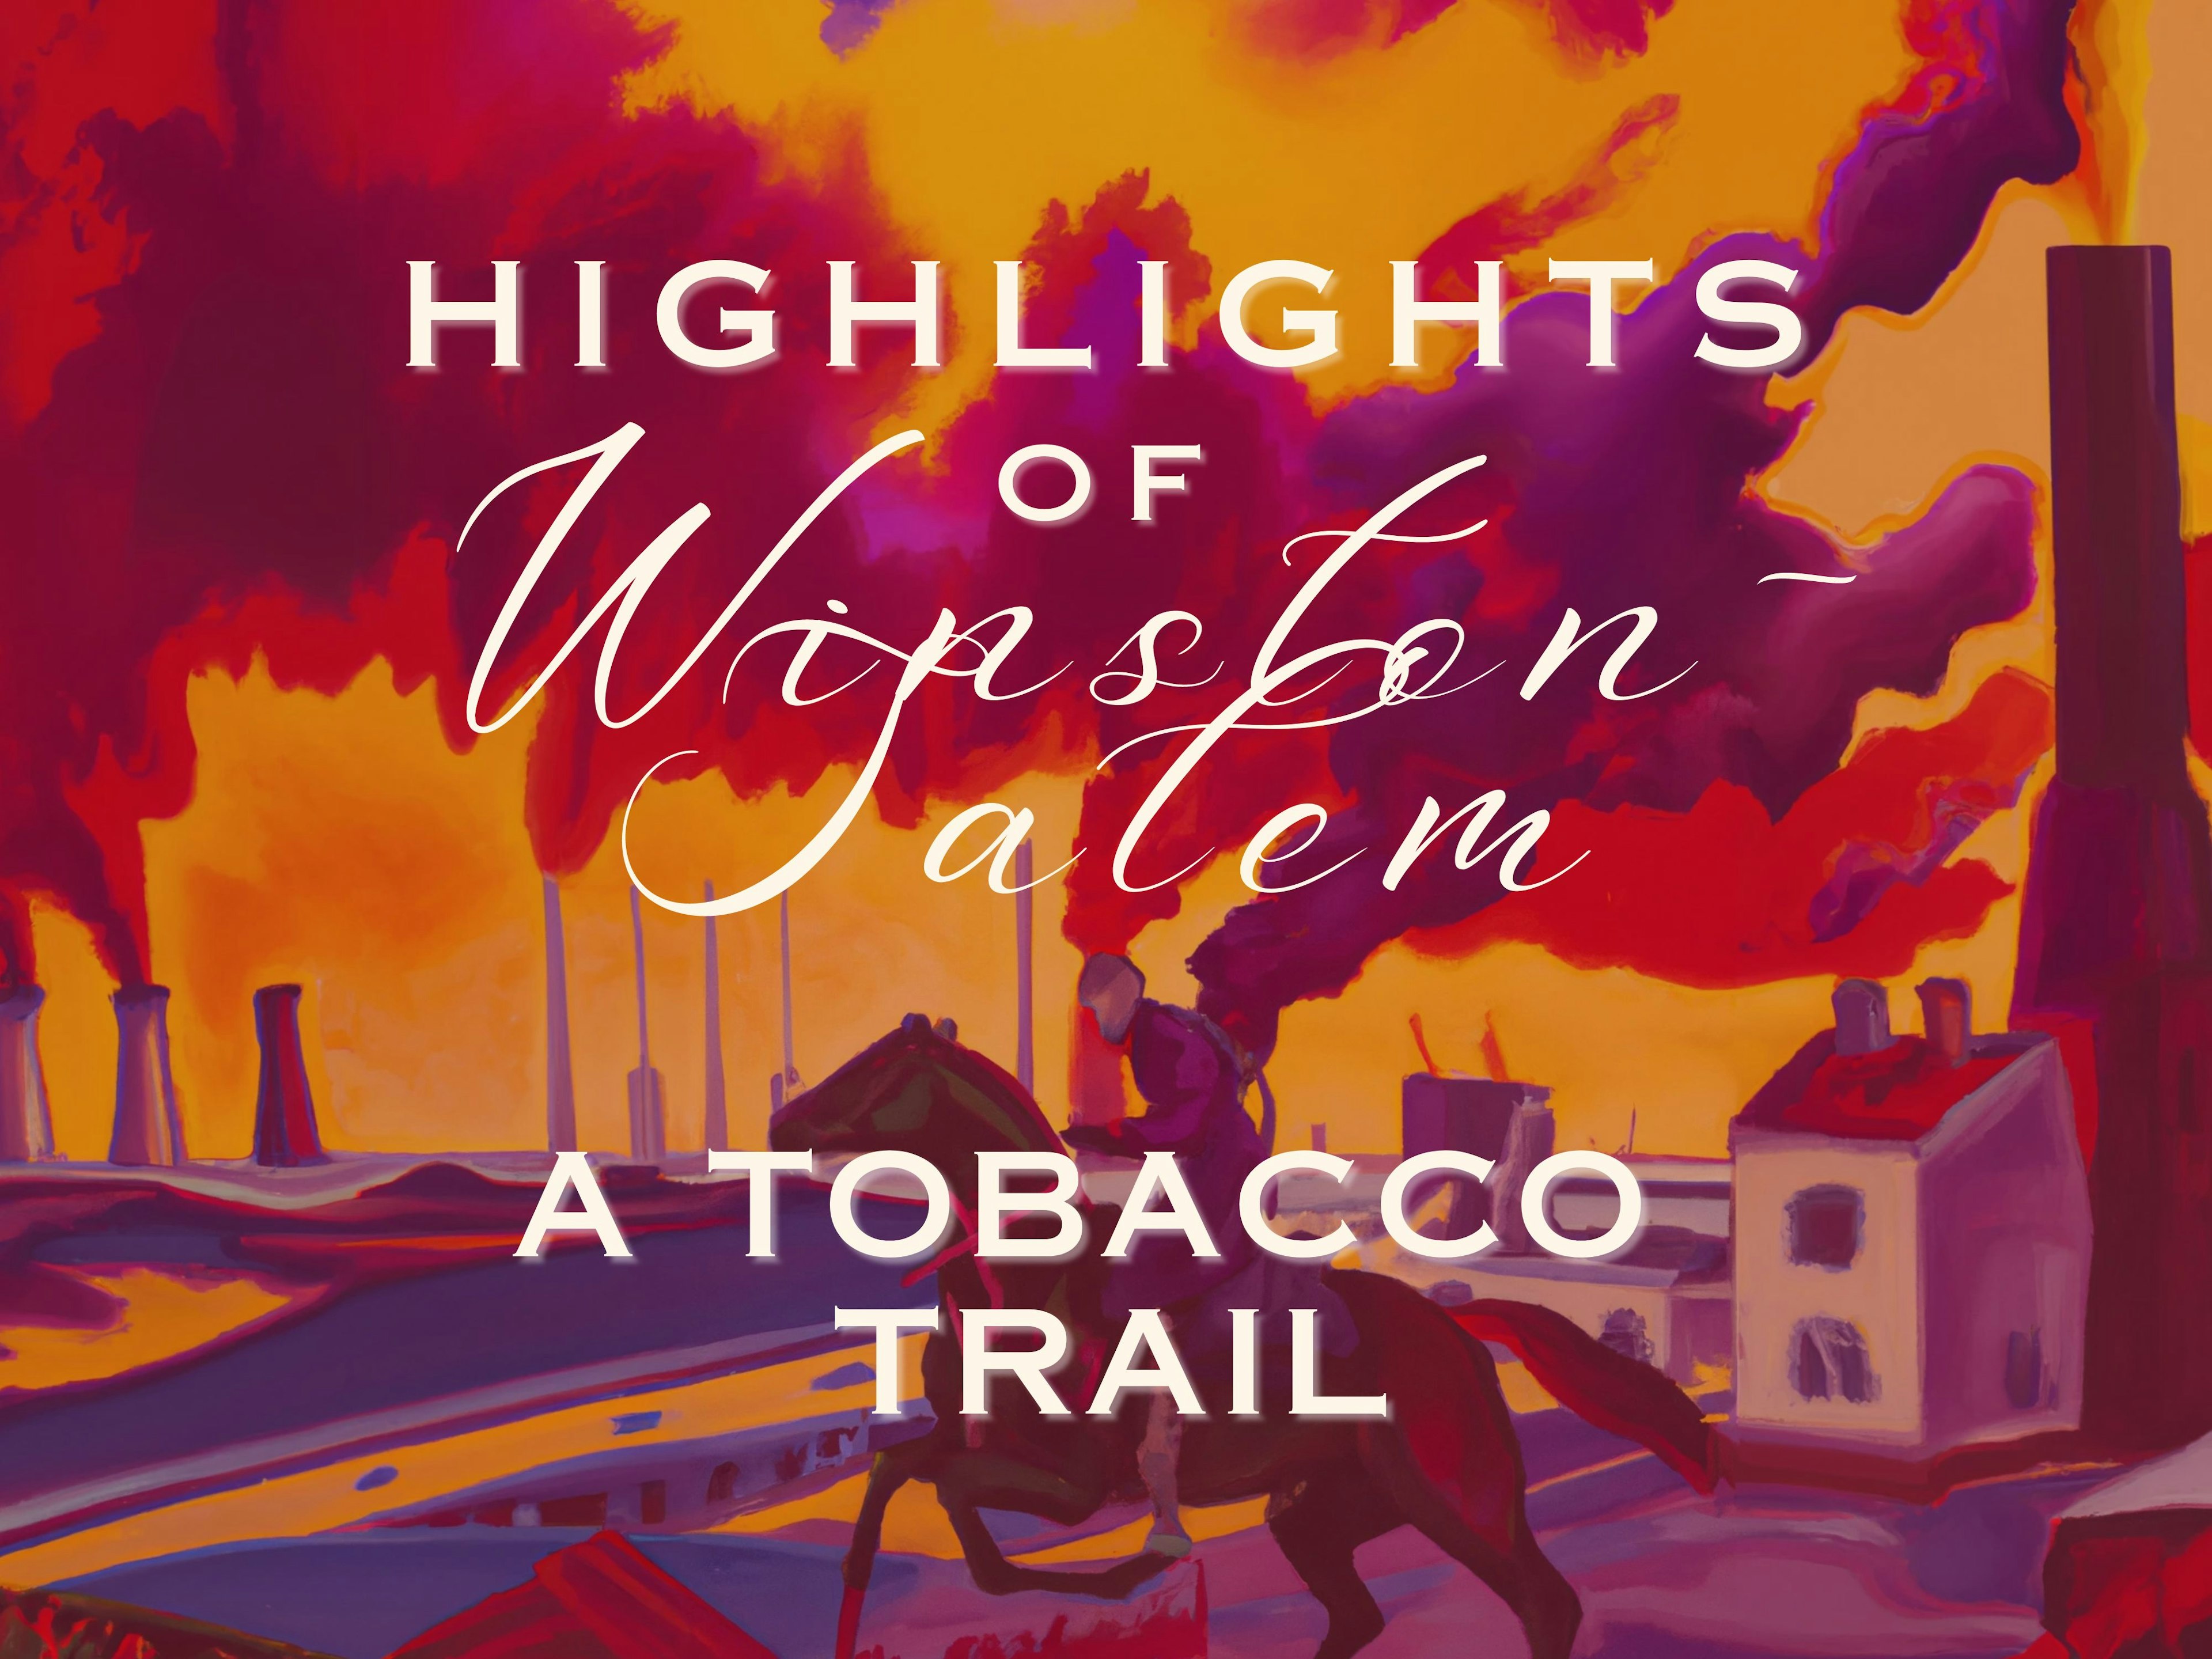 Highlights of Winston-Salem: A Tobacco Trail